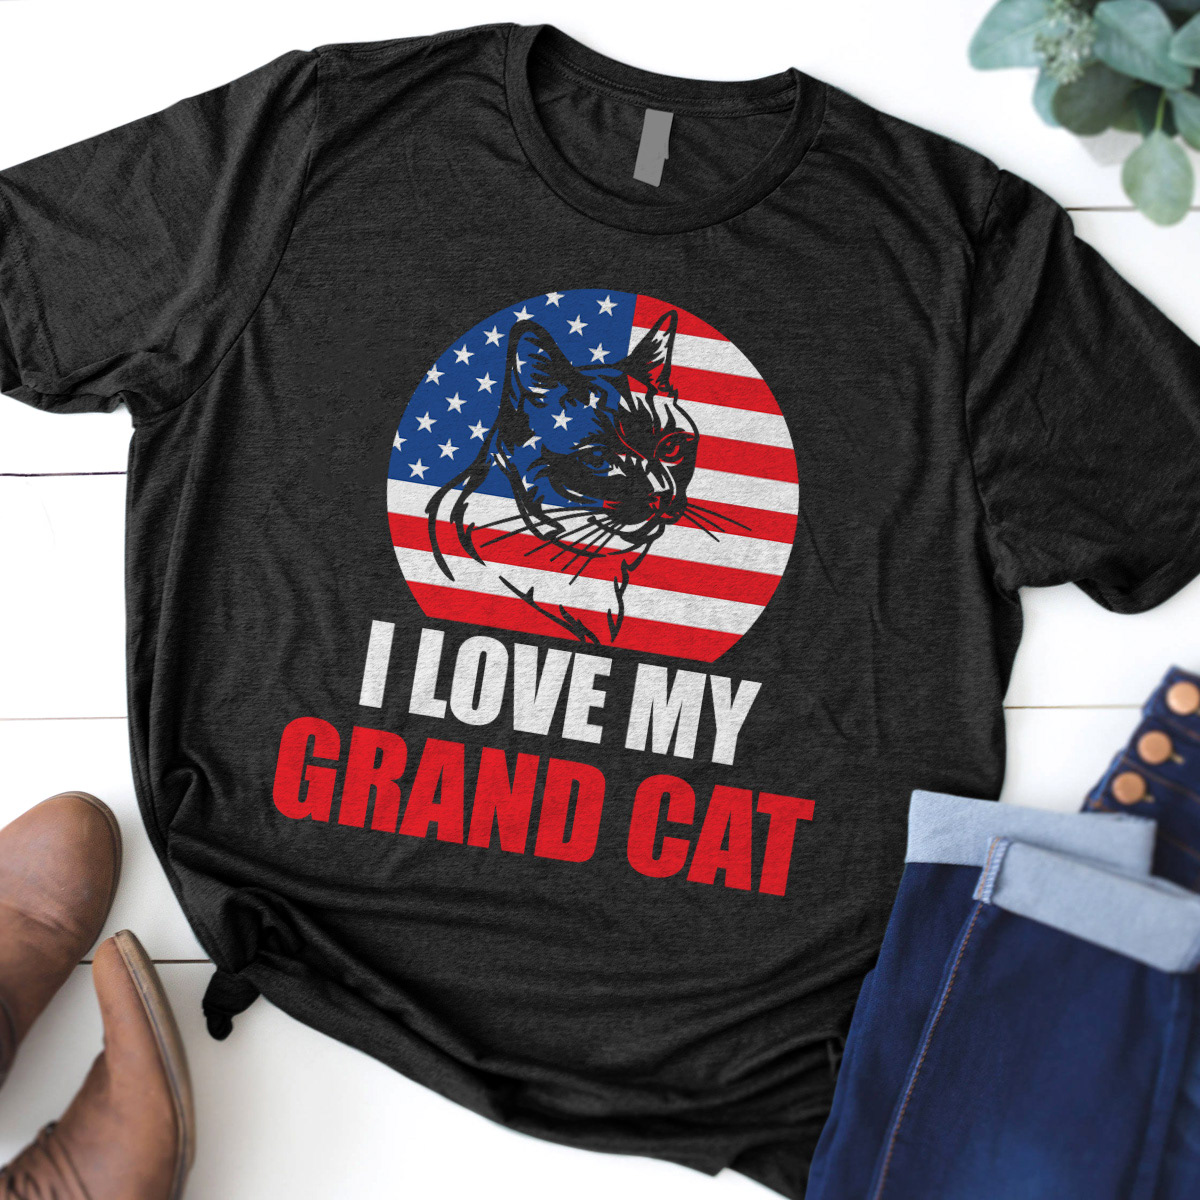 Amazon T Shirts cat lovers cat shirt mens Cat T Shirt Cat Tshirt design cat vector custom t shirt T Shirt tshirt typography t shirt